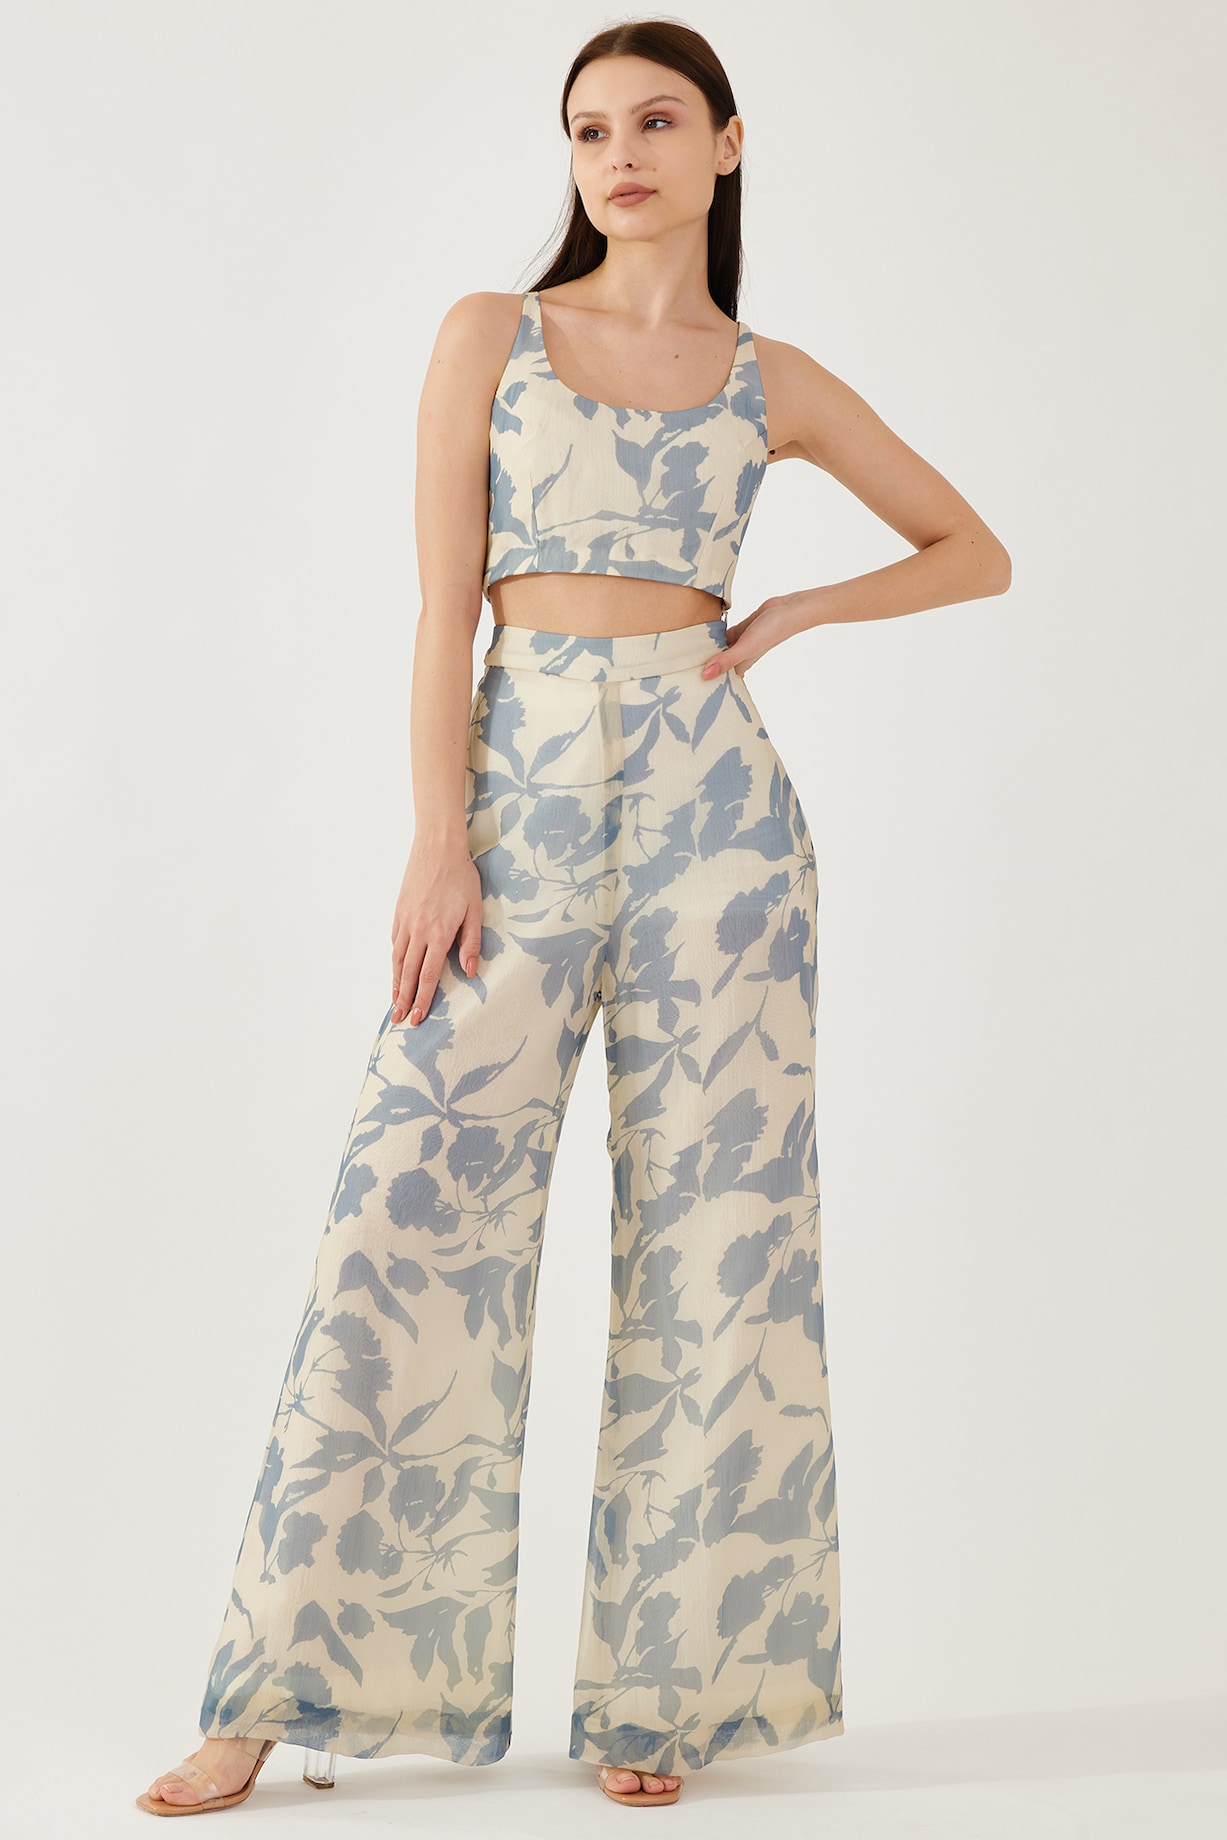 Cream & Blue Chiffon Floral Printed Pants Design by Koai at